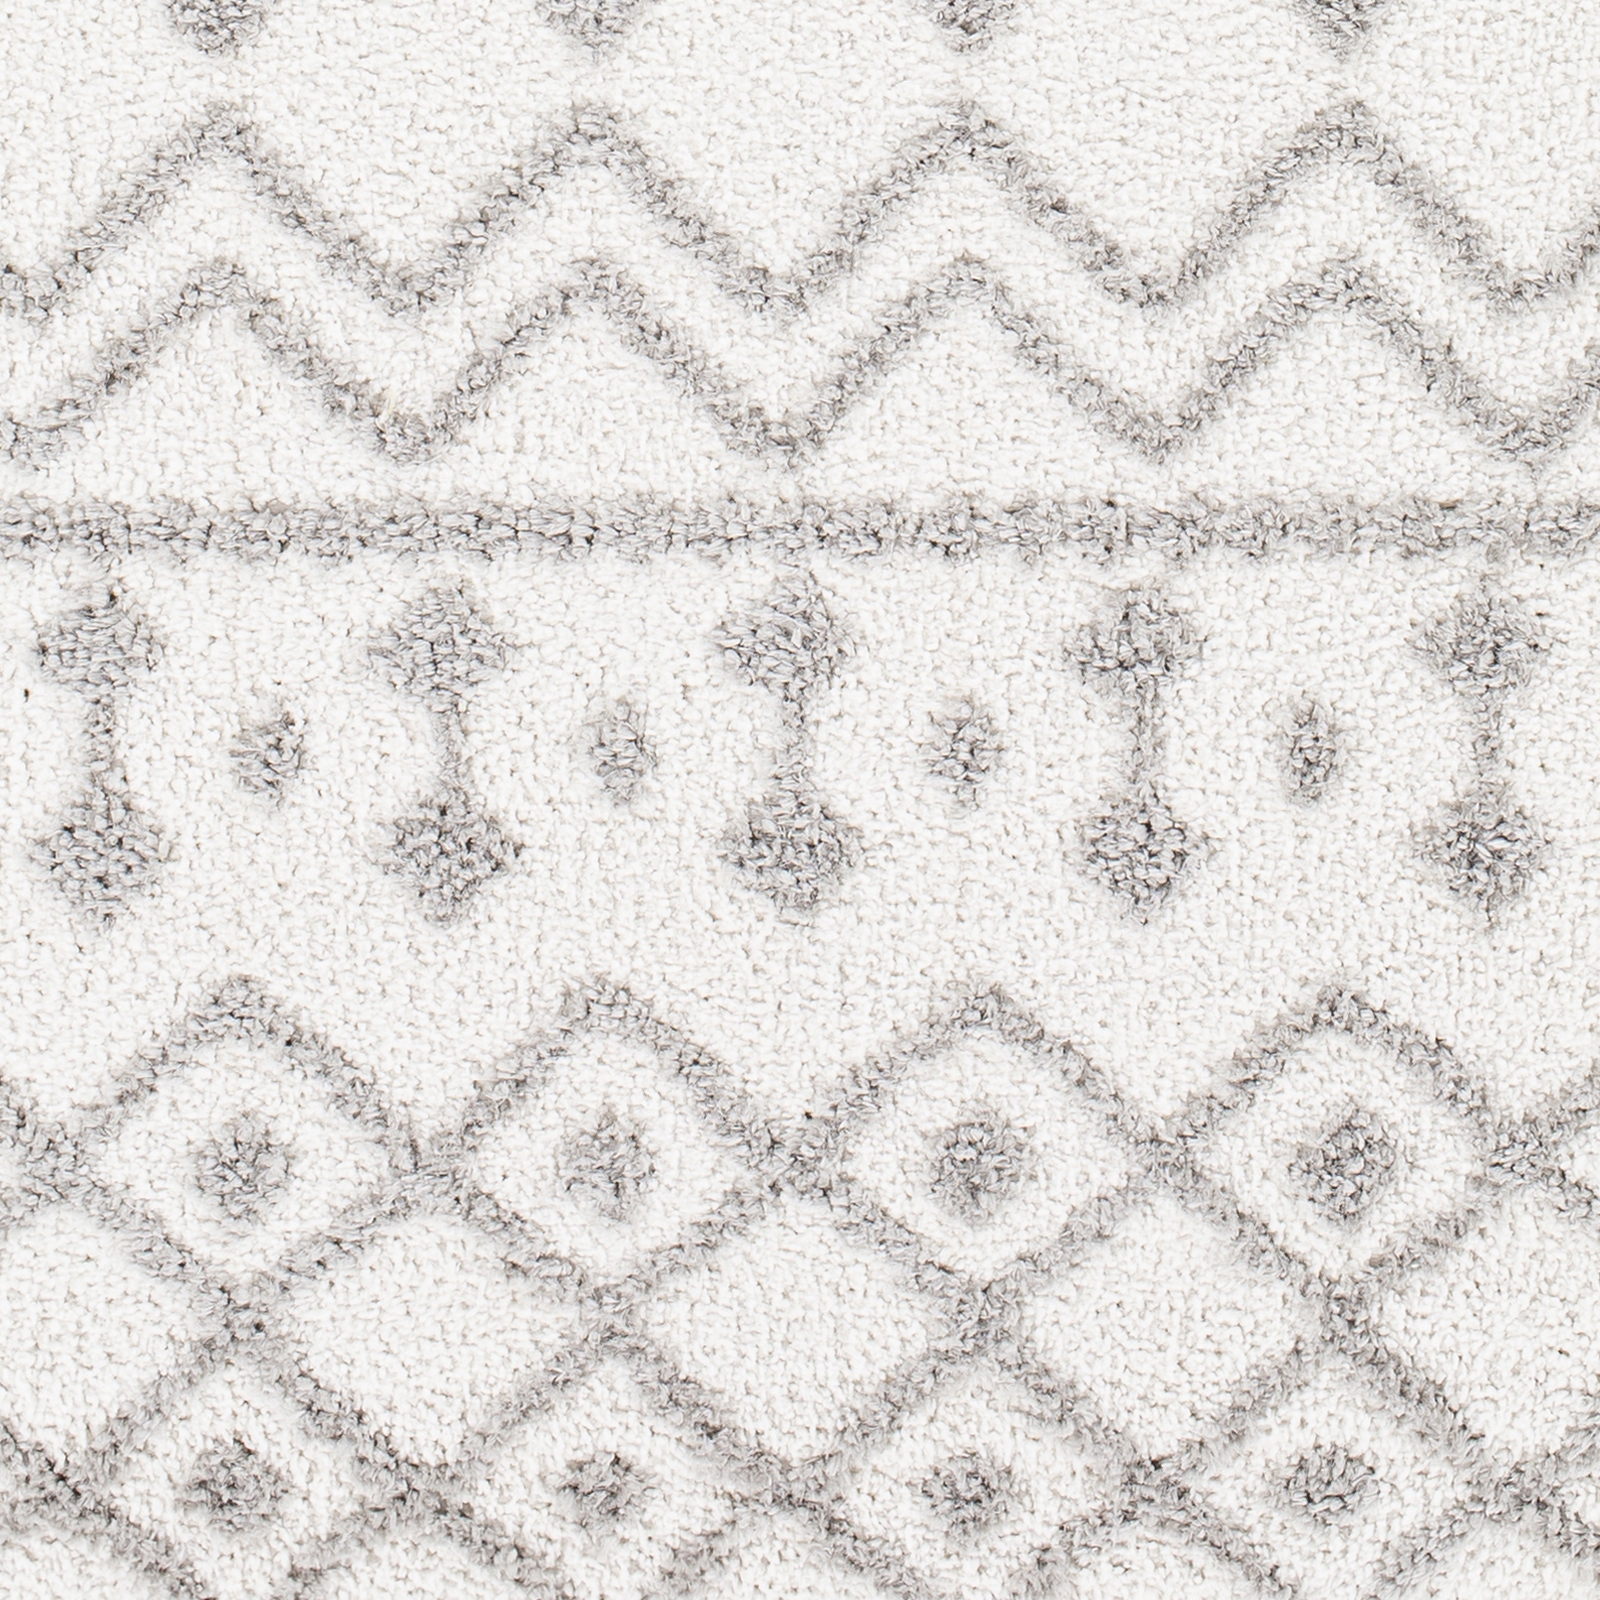 Alhambra Rug, 9'3" x 12' - Image 5